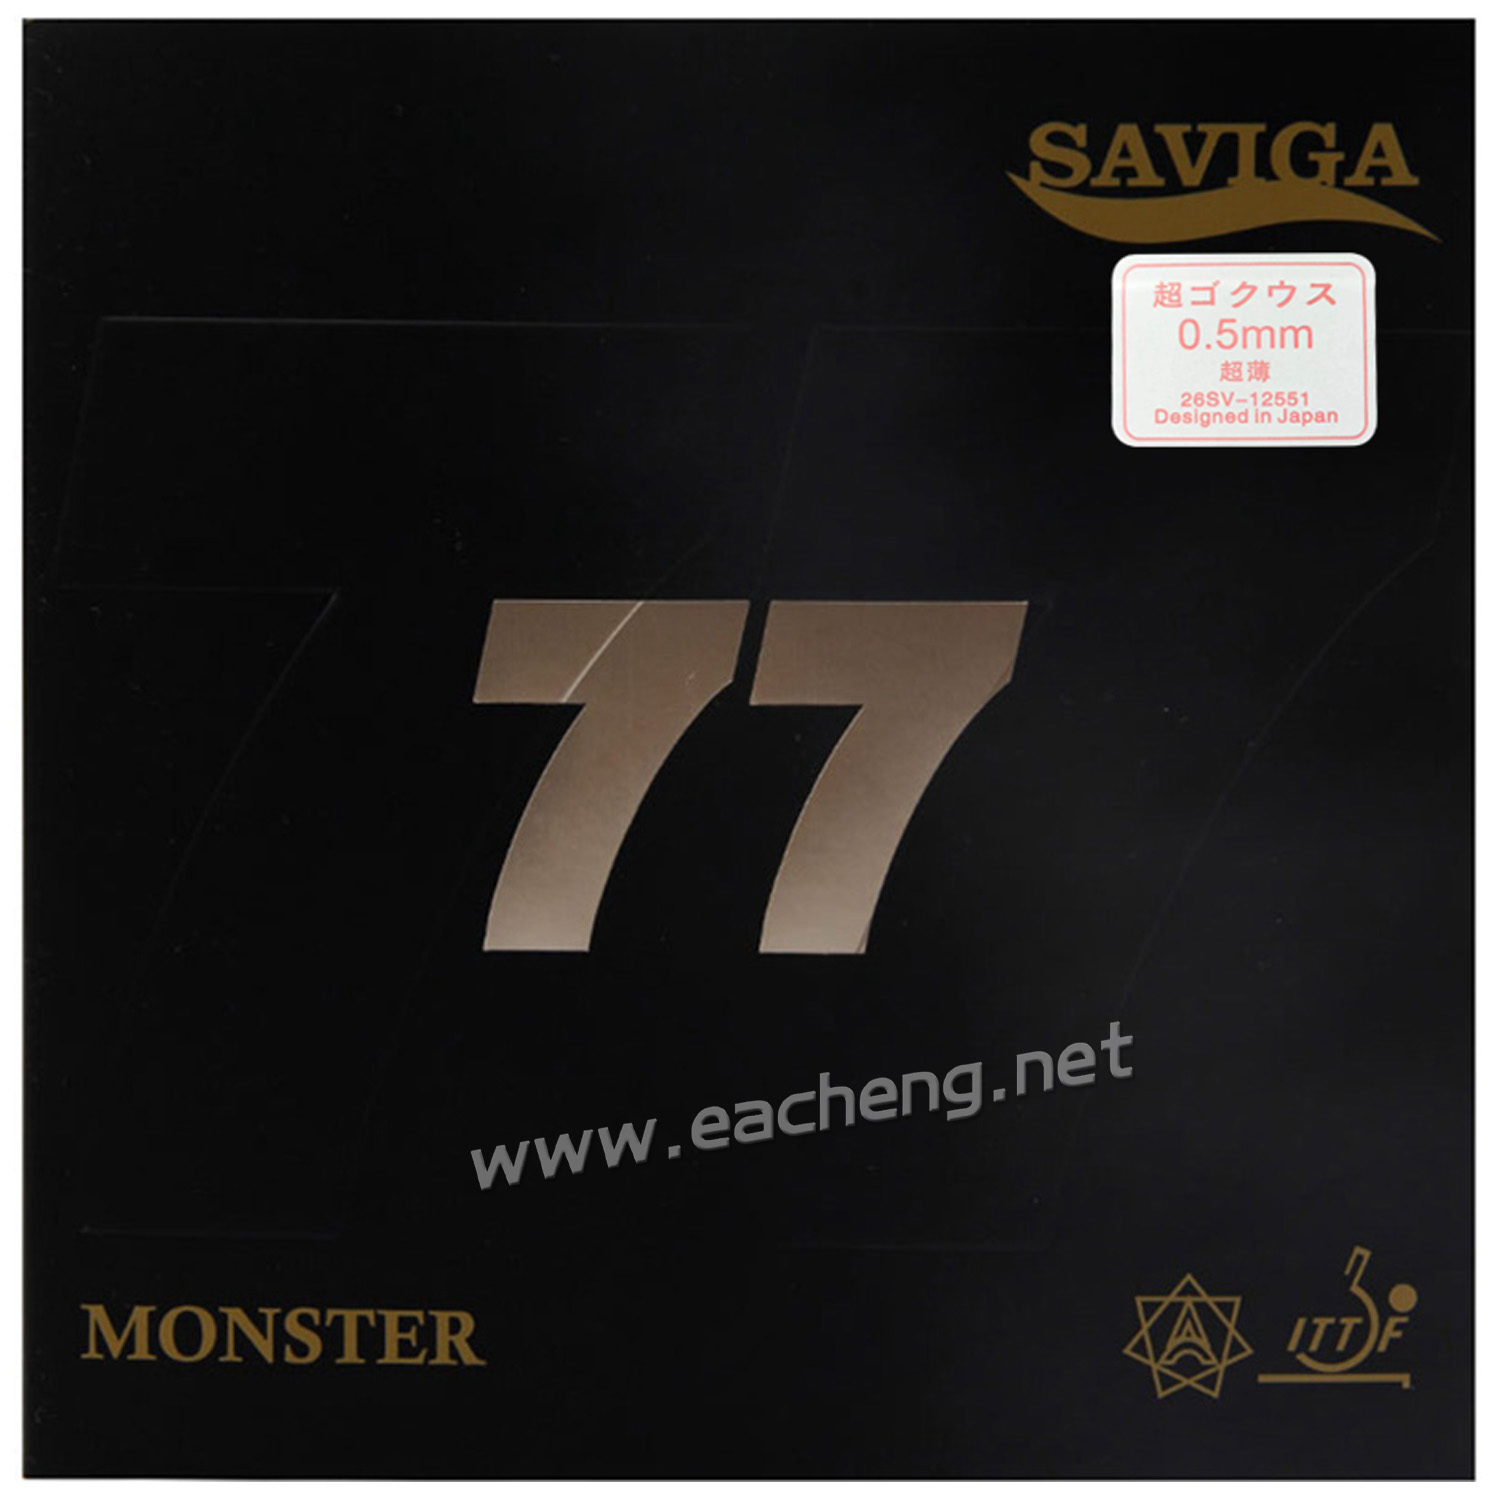 SAVIGA 77 Monster